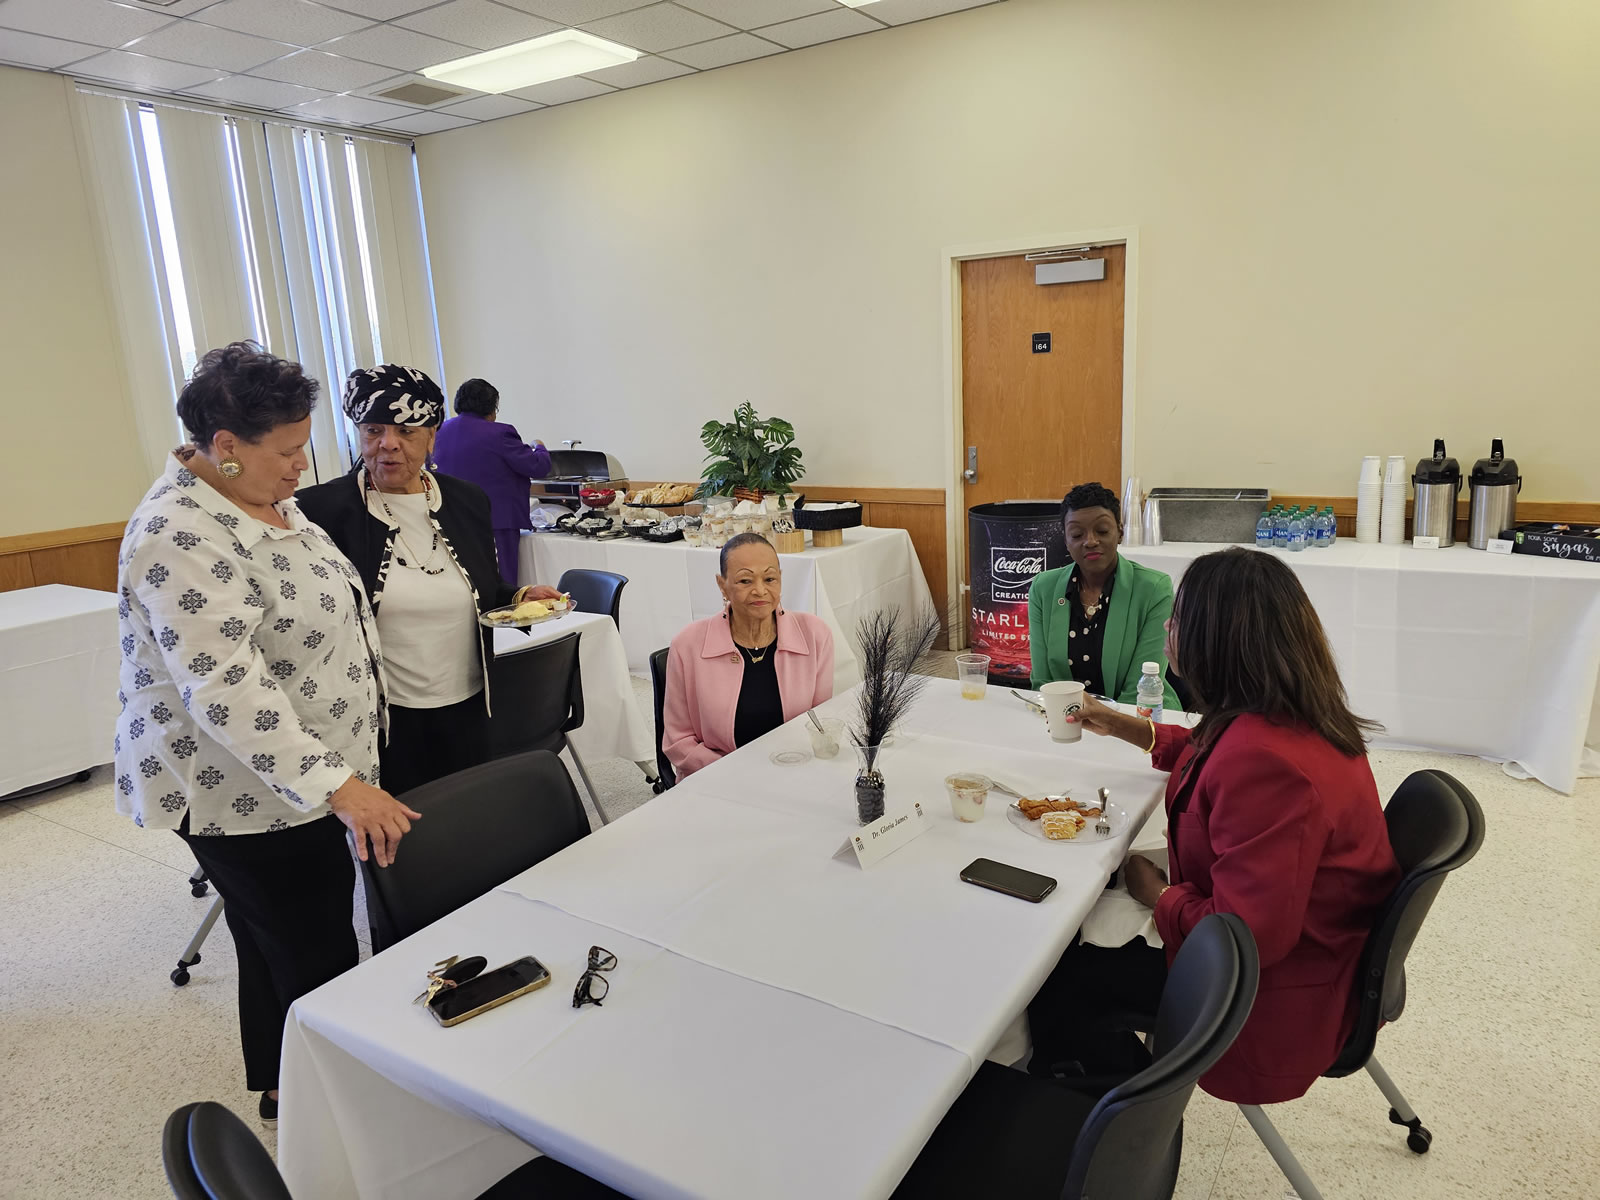 Title III Programs Mid-Year External Evaluation Meet & Greet Breakfast - Photo 6